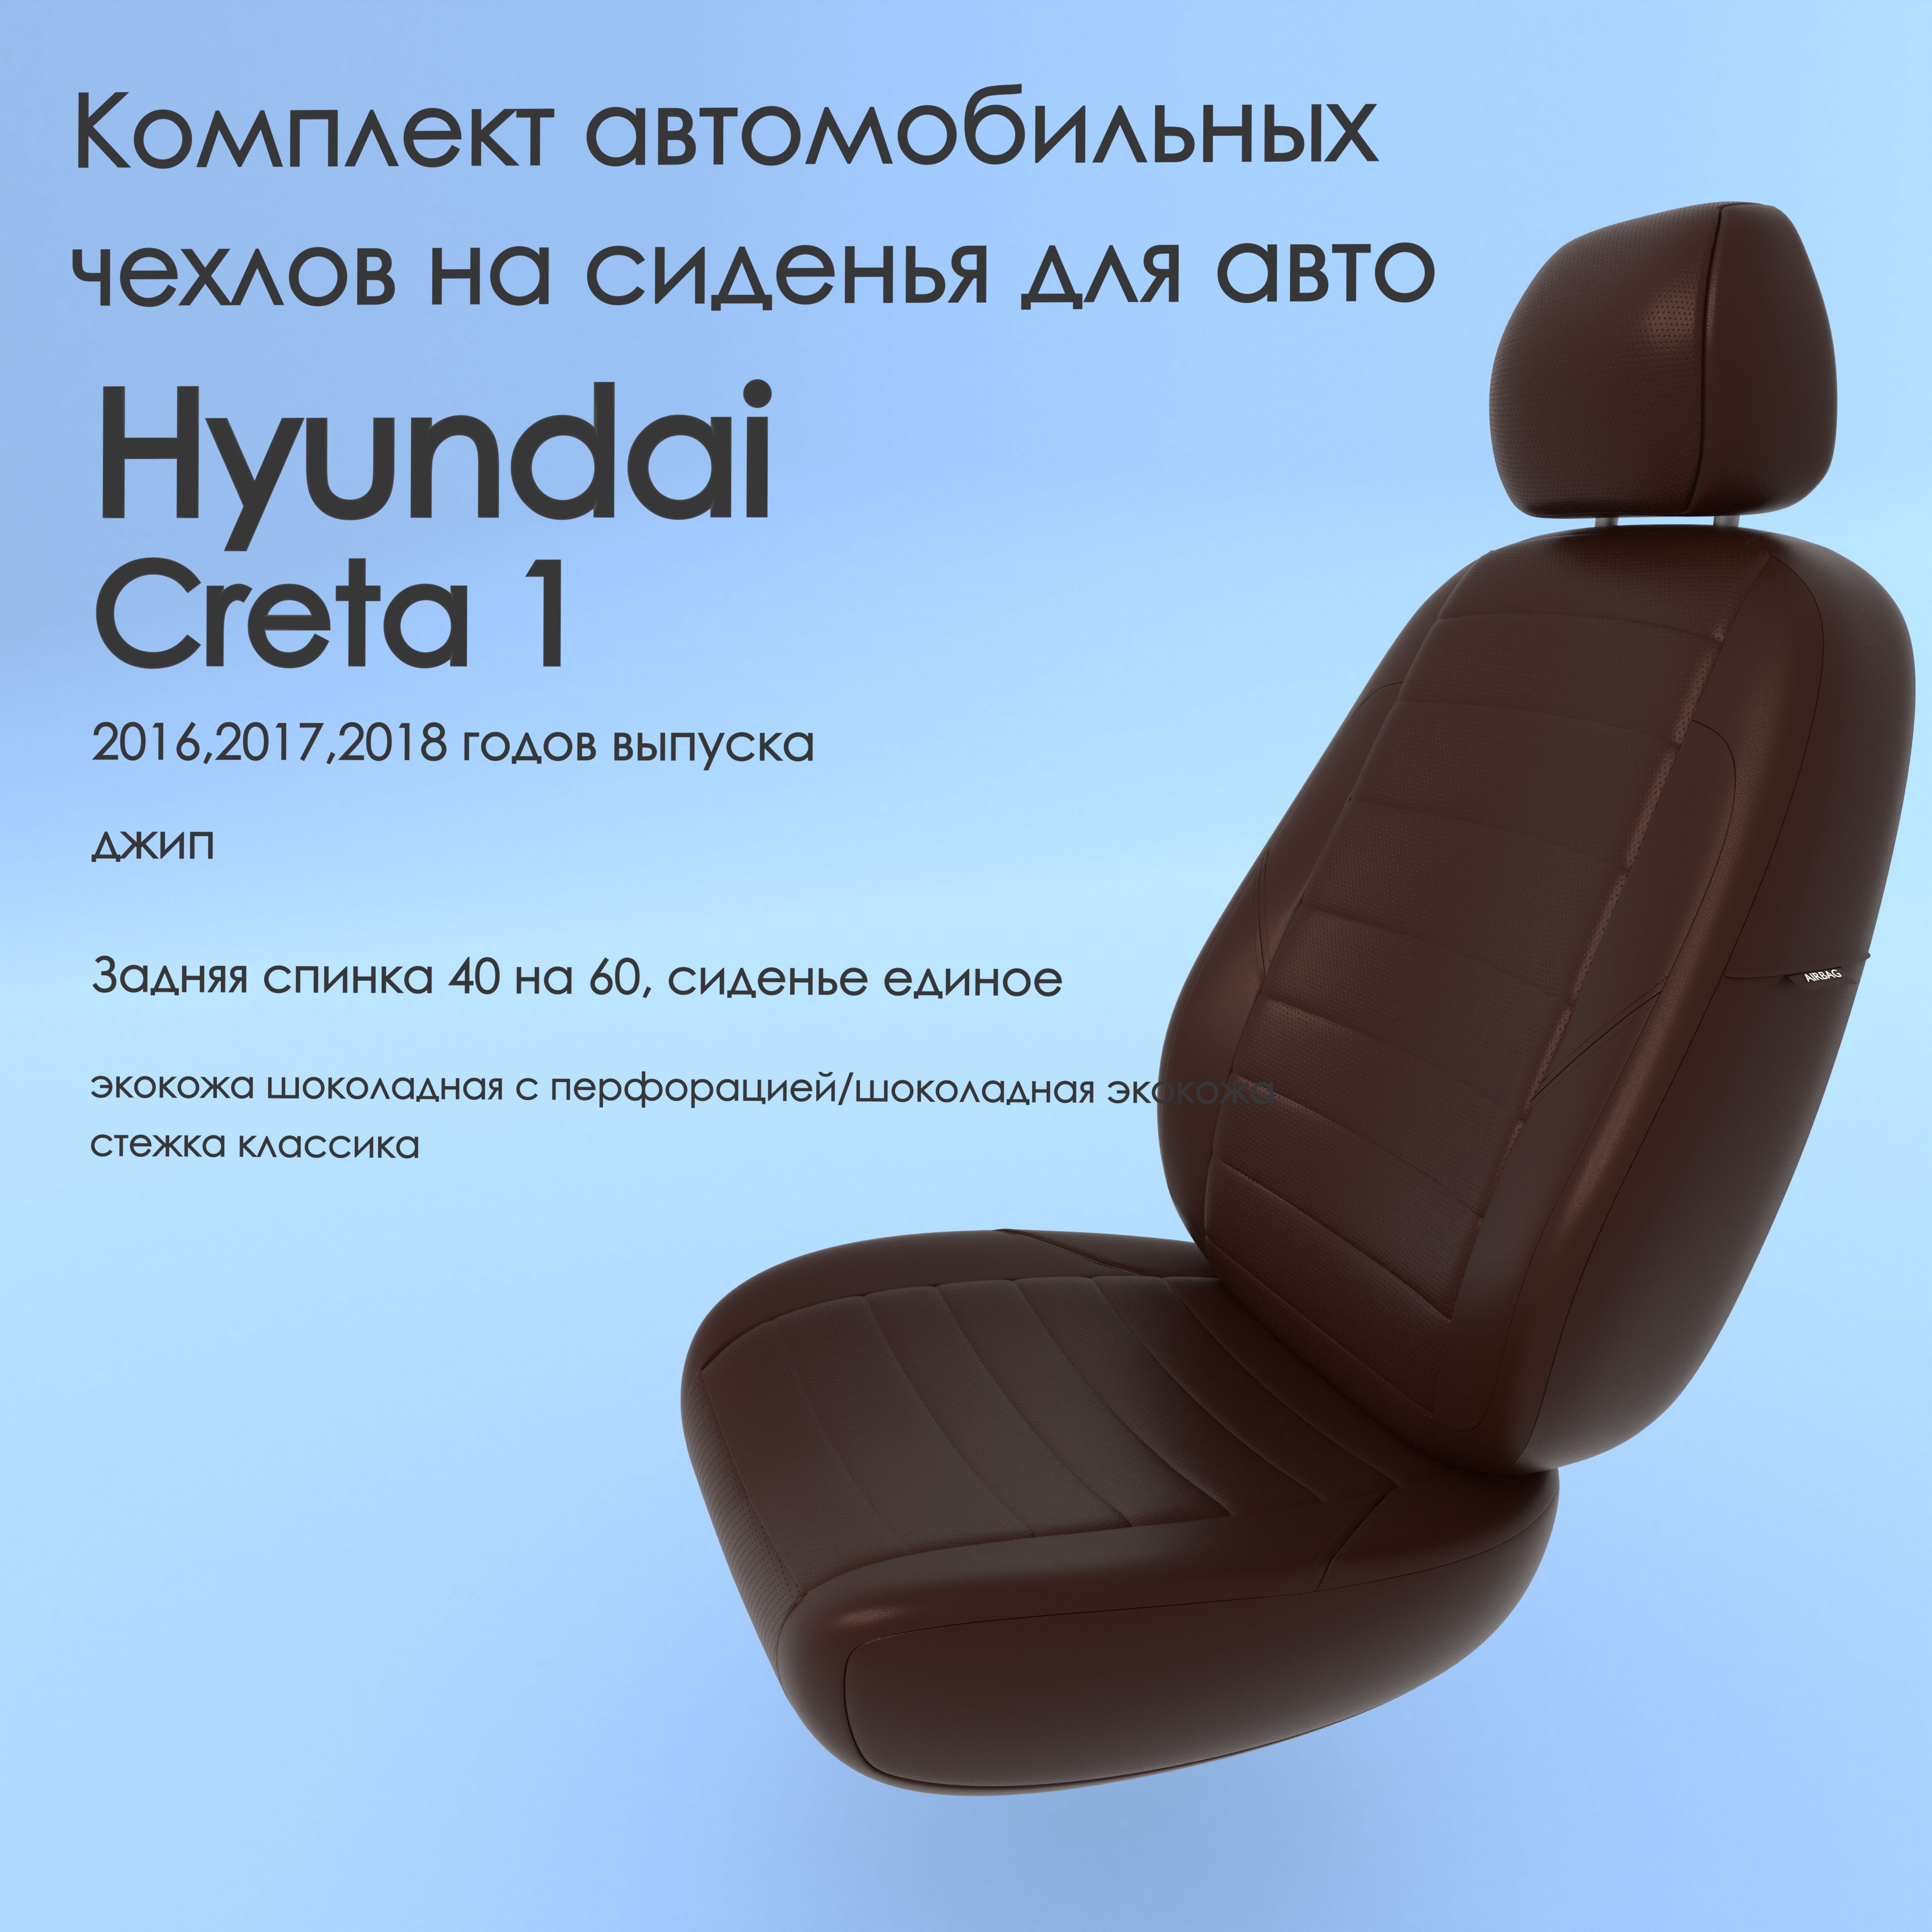 Чехлы Чехломания Hyundai Creta 1 2016,2017,2018 джип 40/60 шок-эк/k1